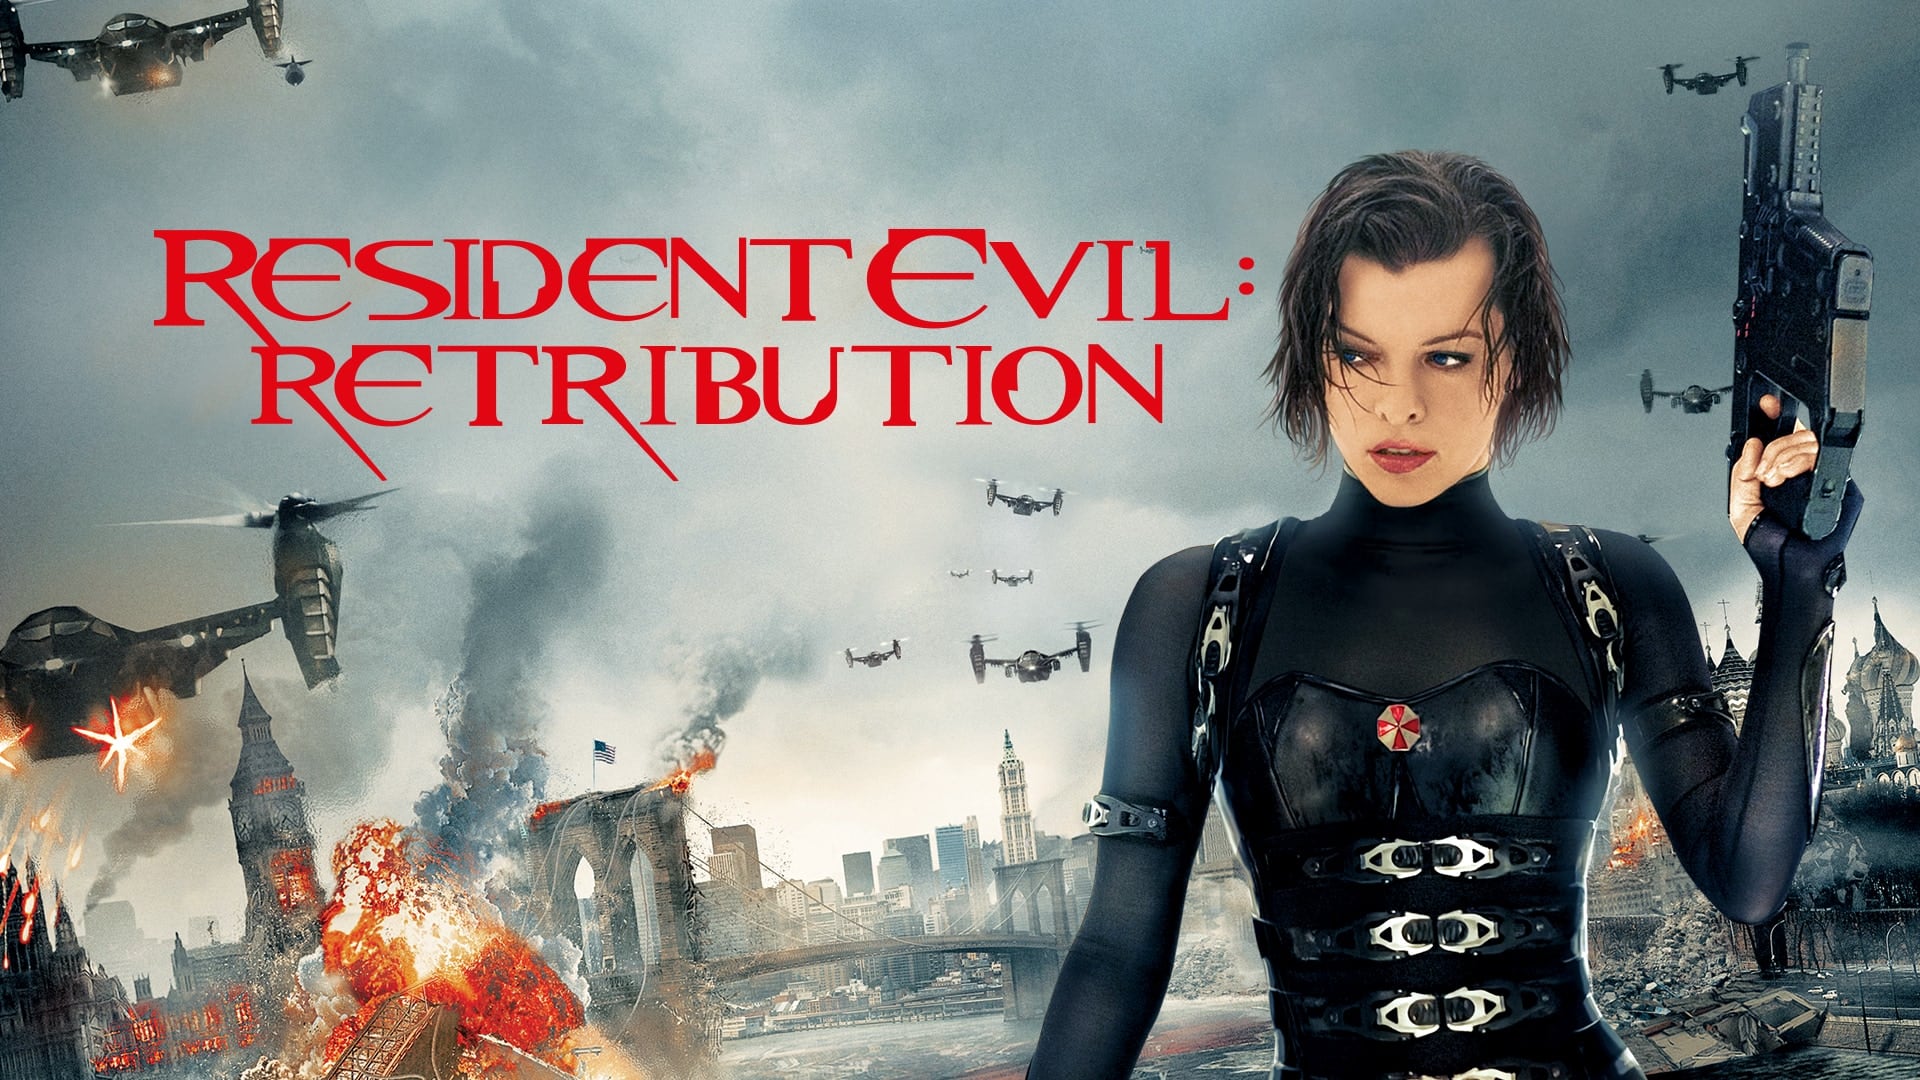 Watch Resident Evil: Retribution Online | Stream Full Movies